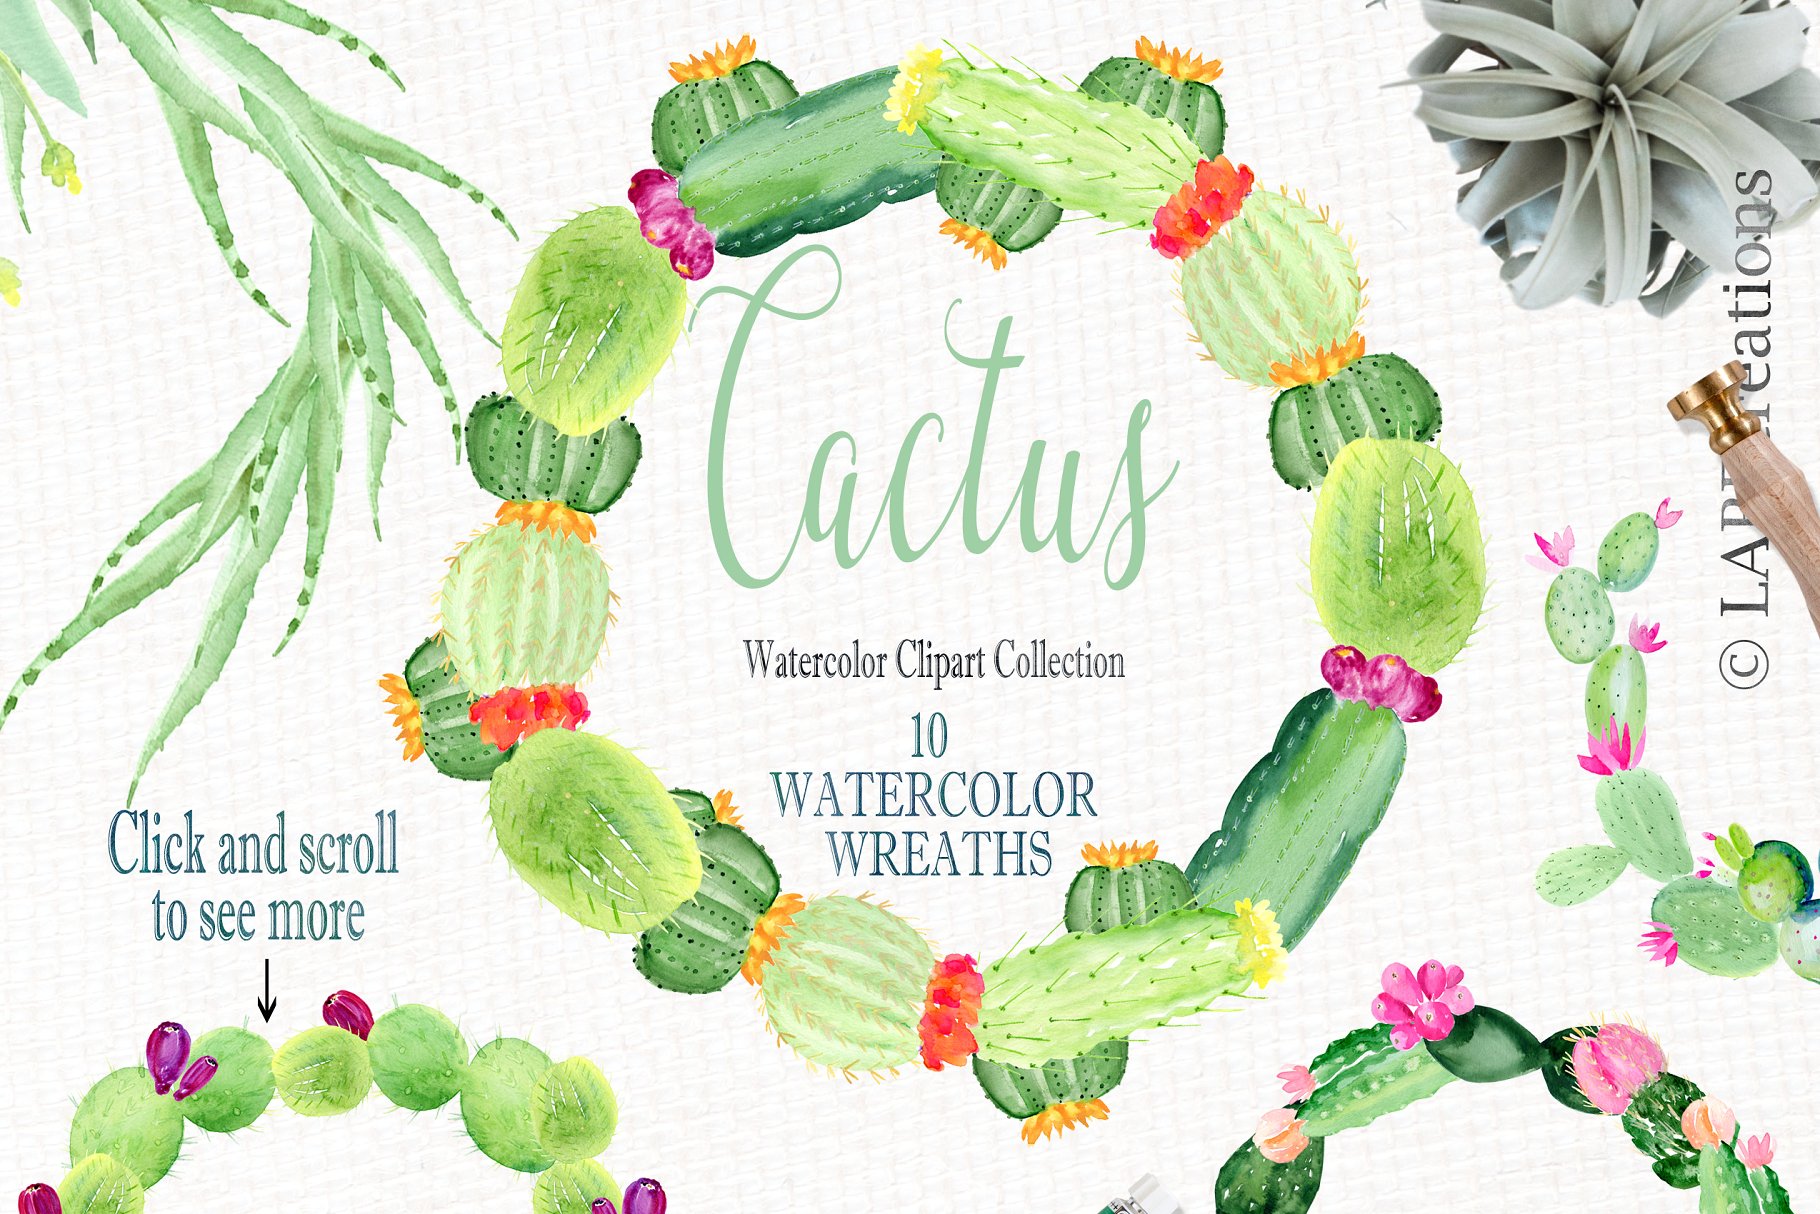 仙人掌水彩剪贴画合集 Cactus watercolr clipart collection插图(7)